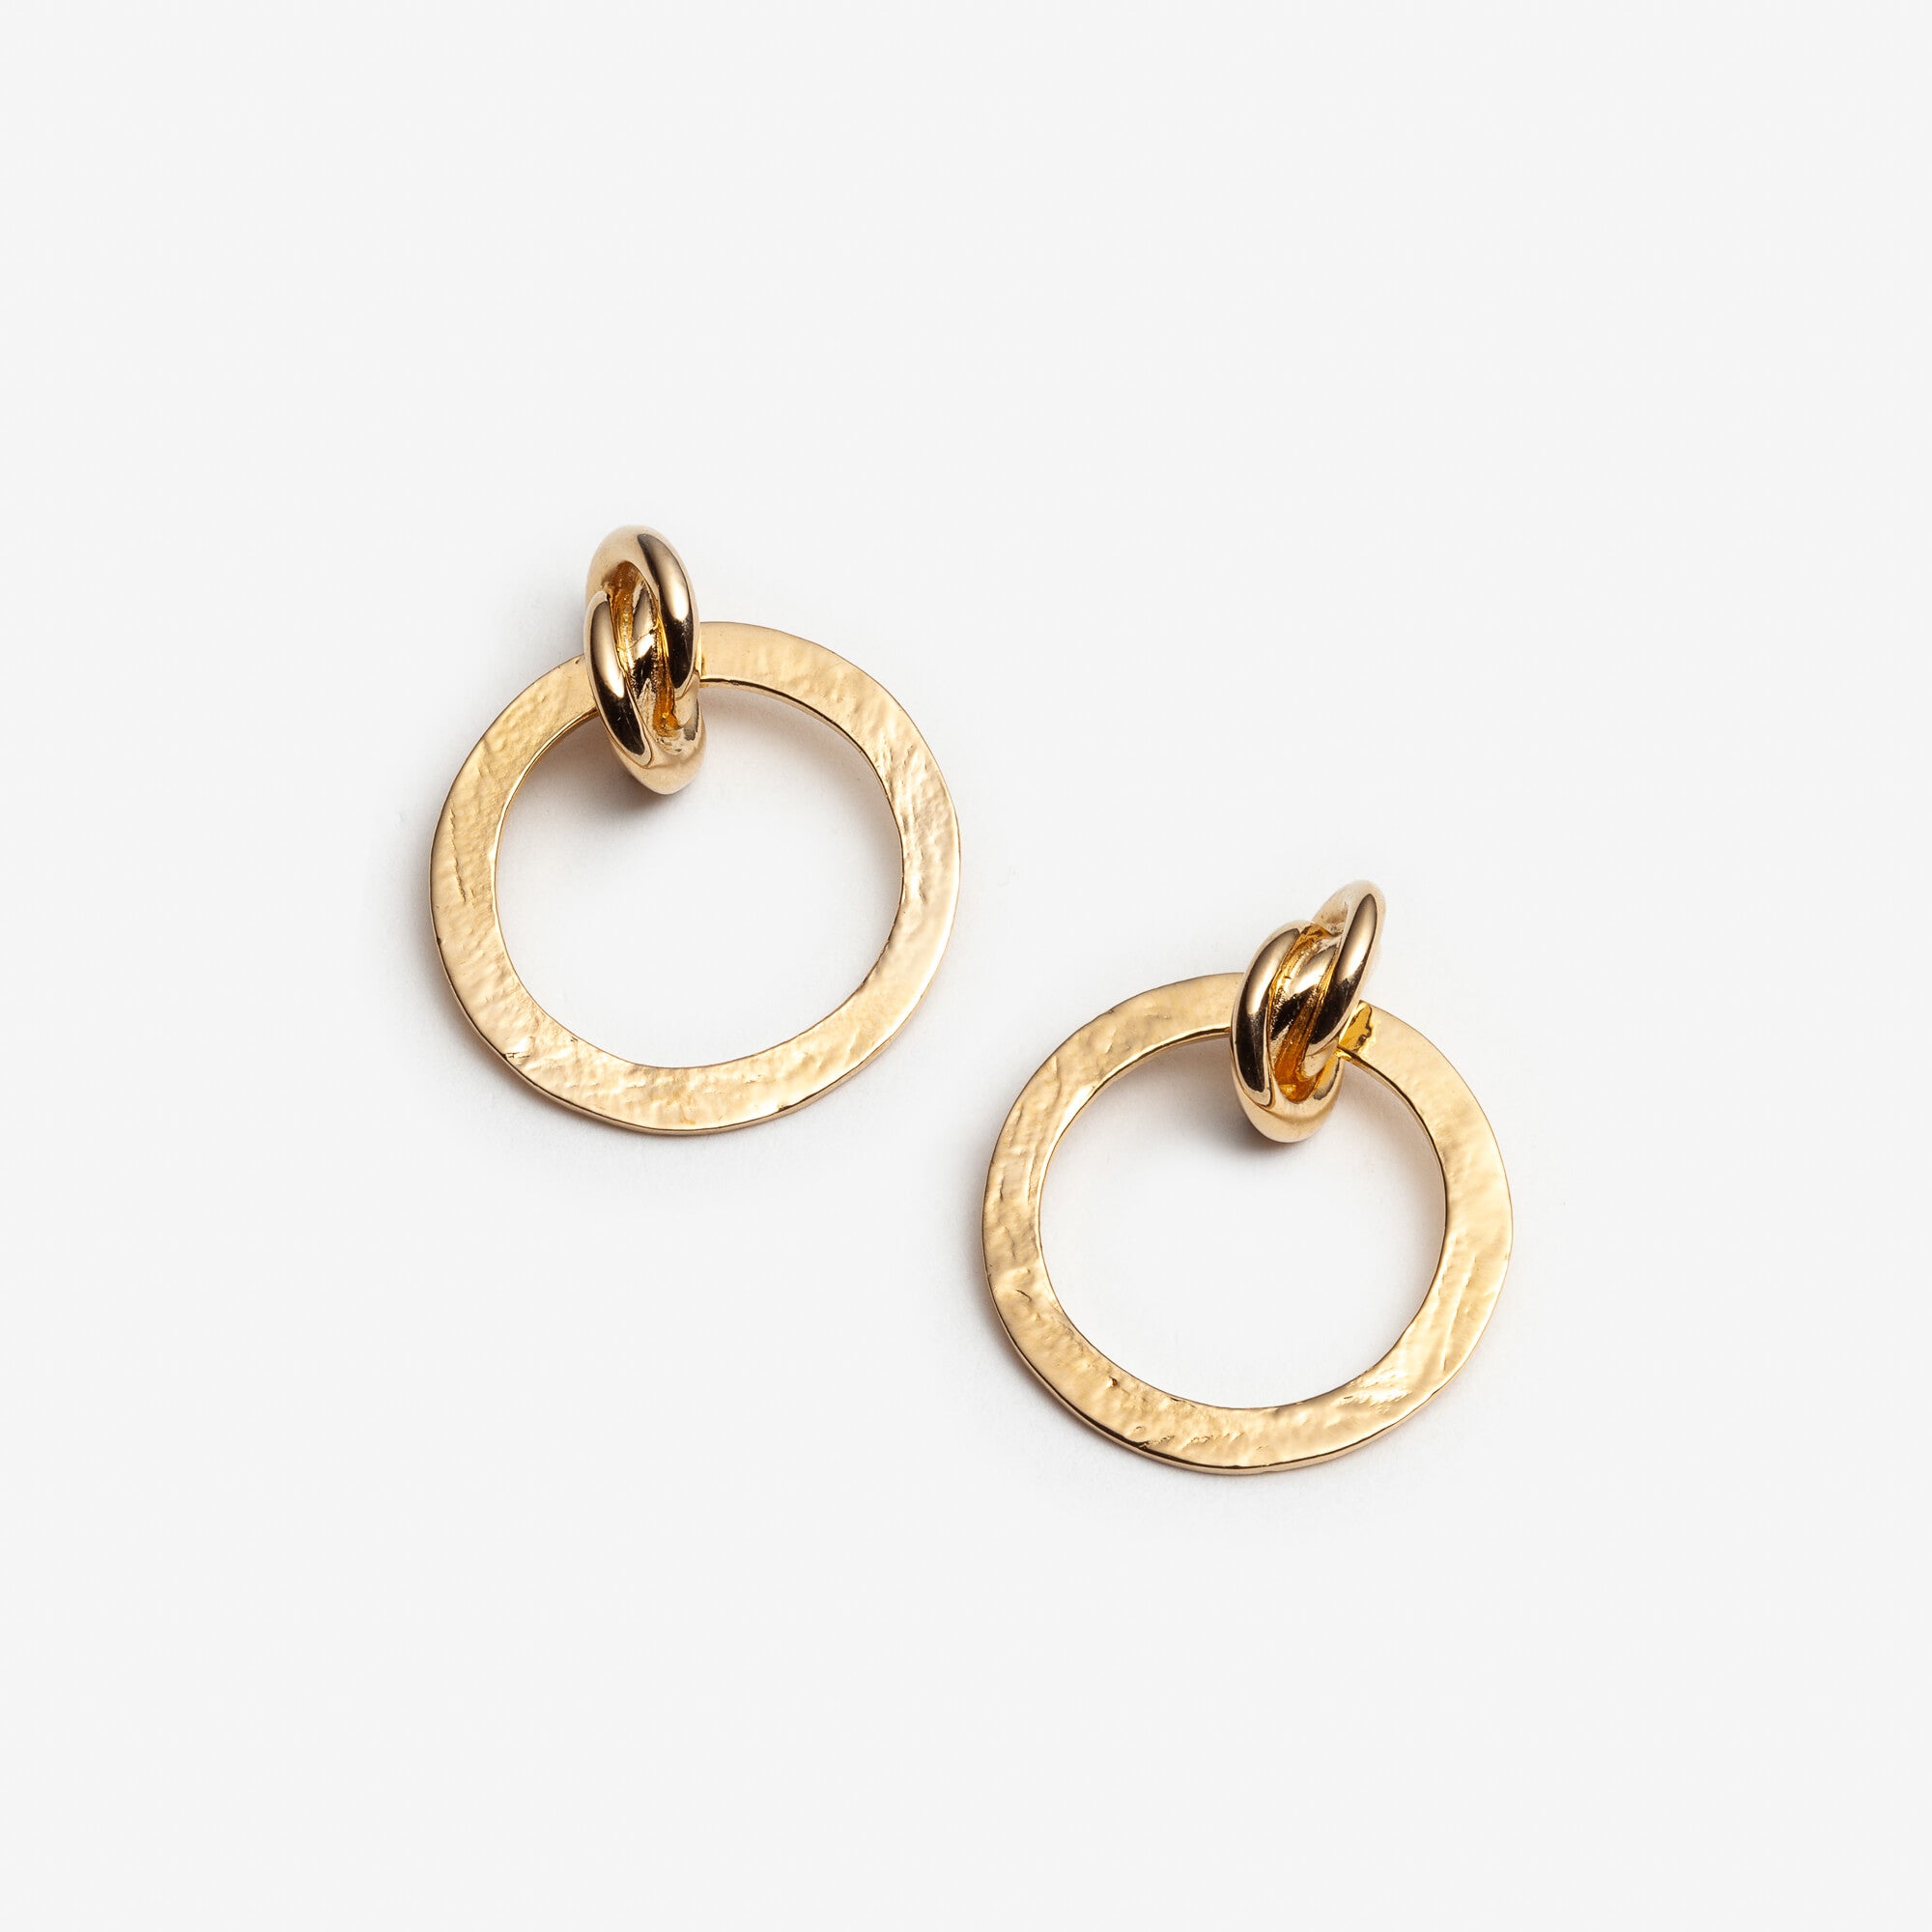 Bienveillante - Earrings by a Quebec Designer